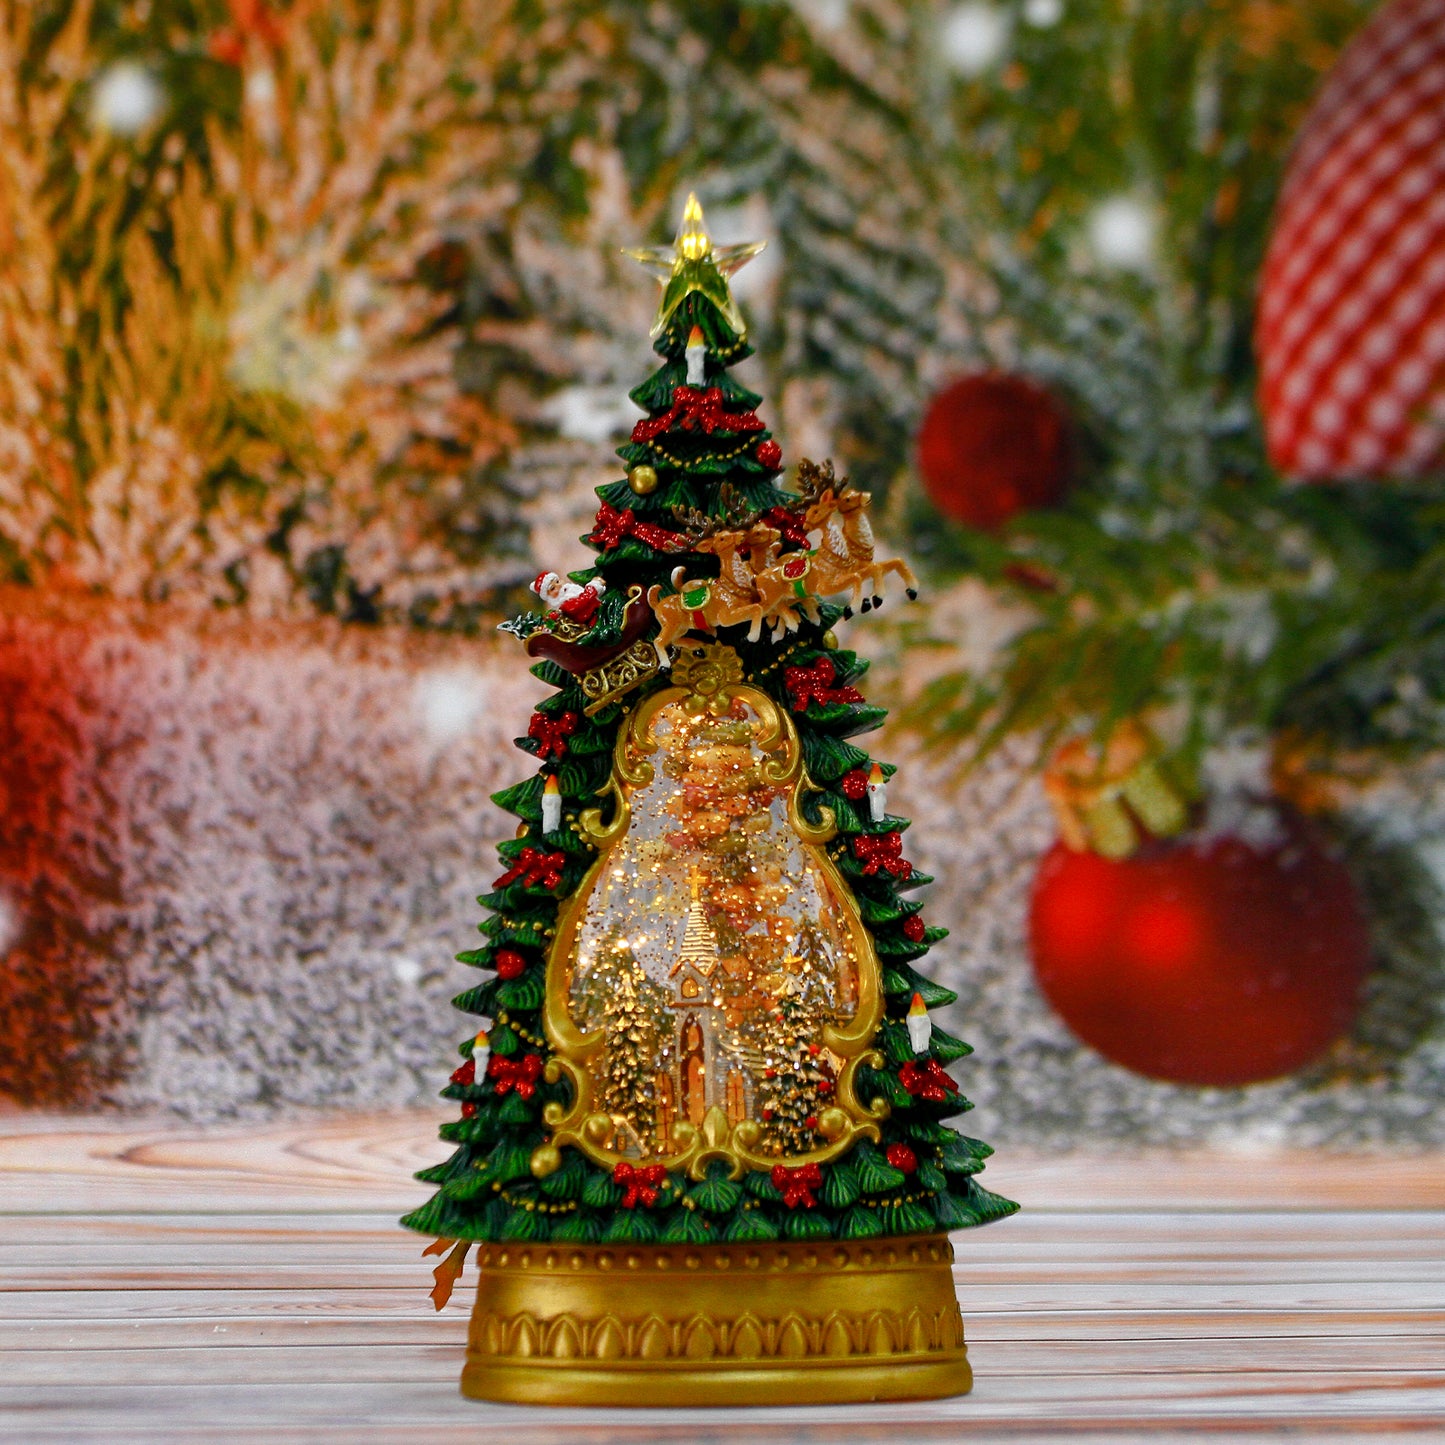 Christmas Snow Globe,Snow Globe Decorations Christian Gifts，Christmas Festival Snow Globe , with Musical Santa Claus, Christmas Tree,Churches,Water Glittering Lantern Swirling